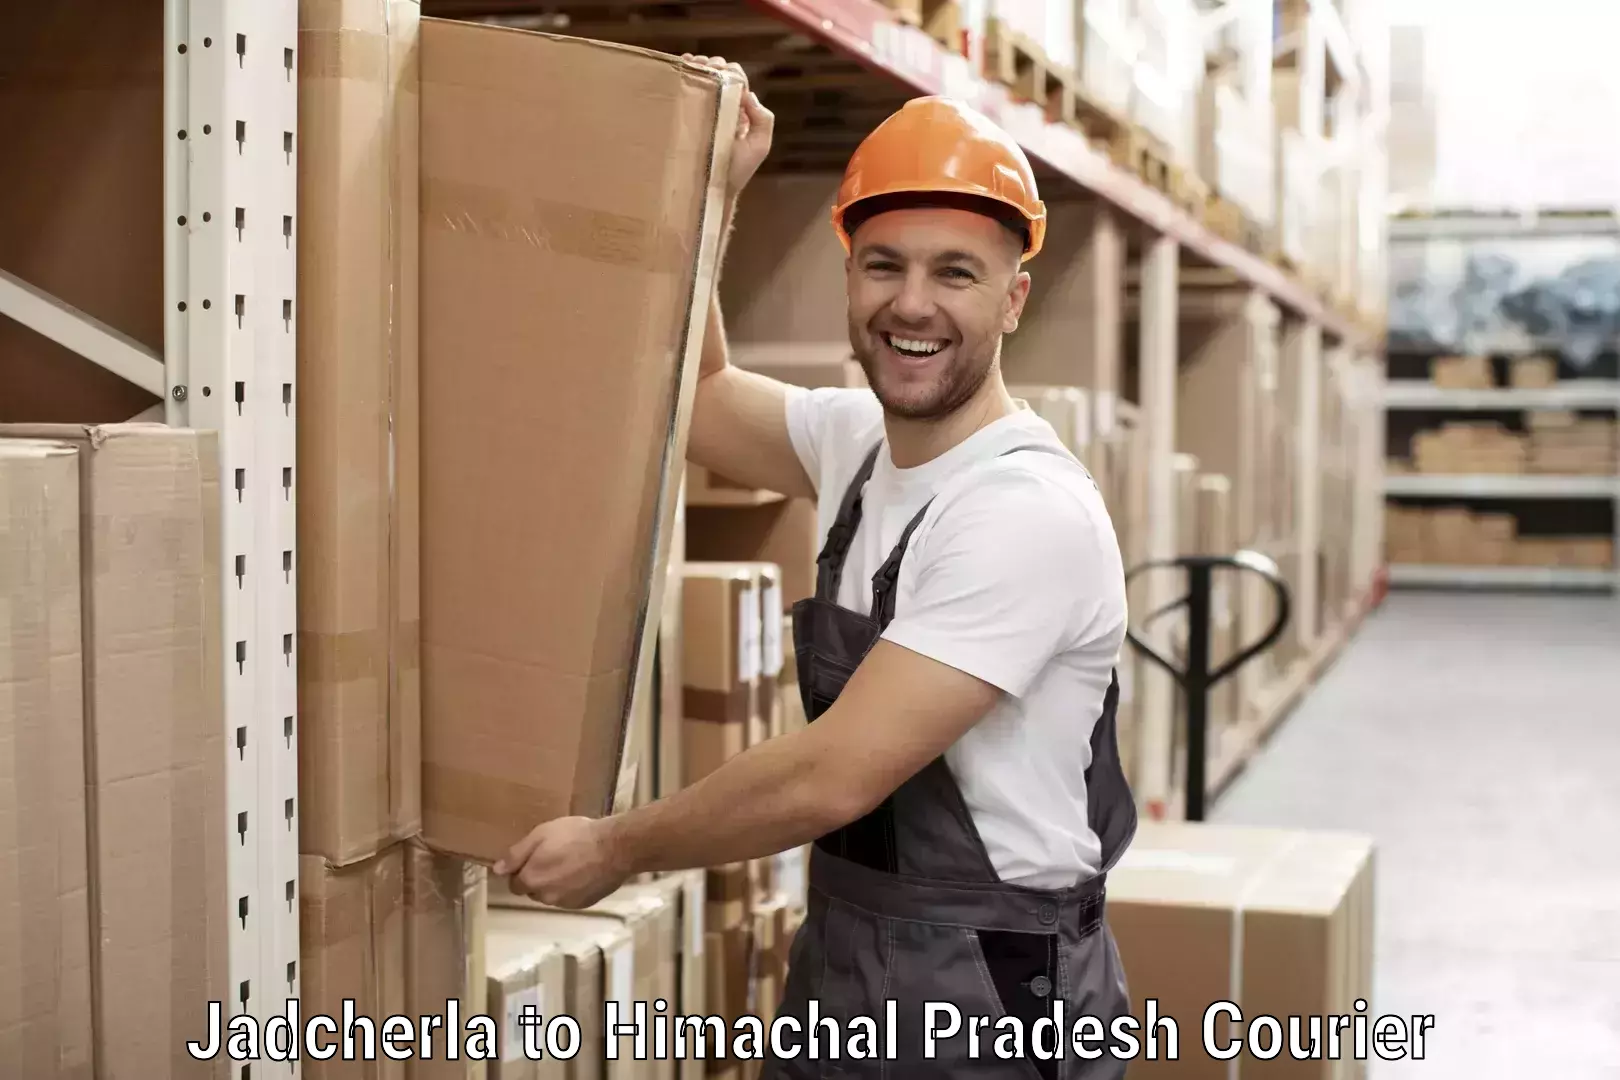 High-speed parcel service Jadcherla to Dheera